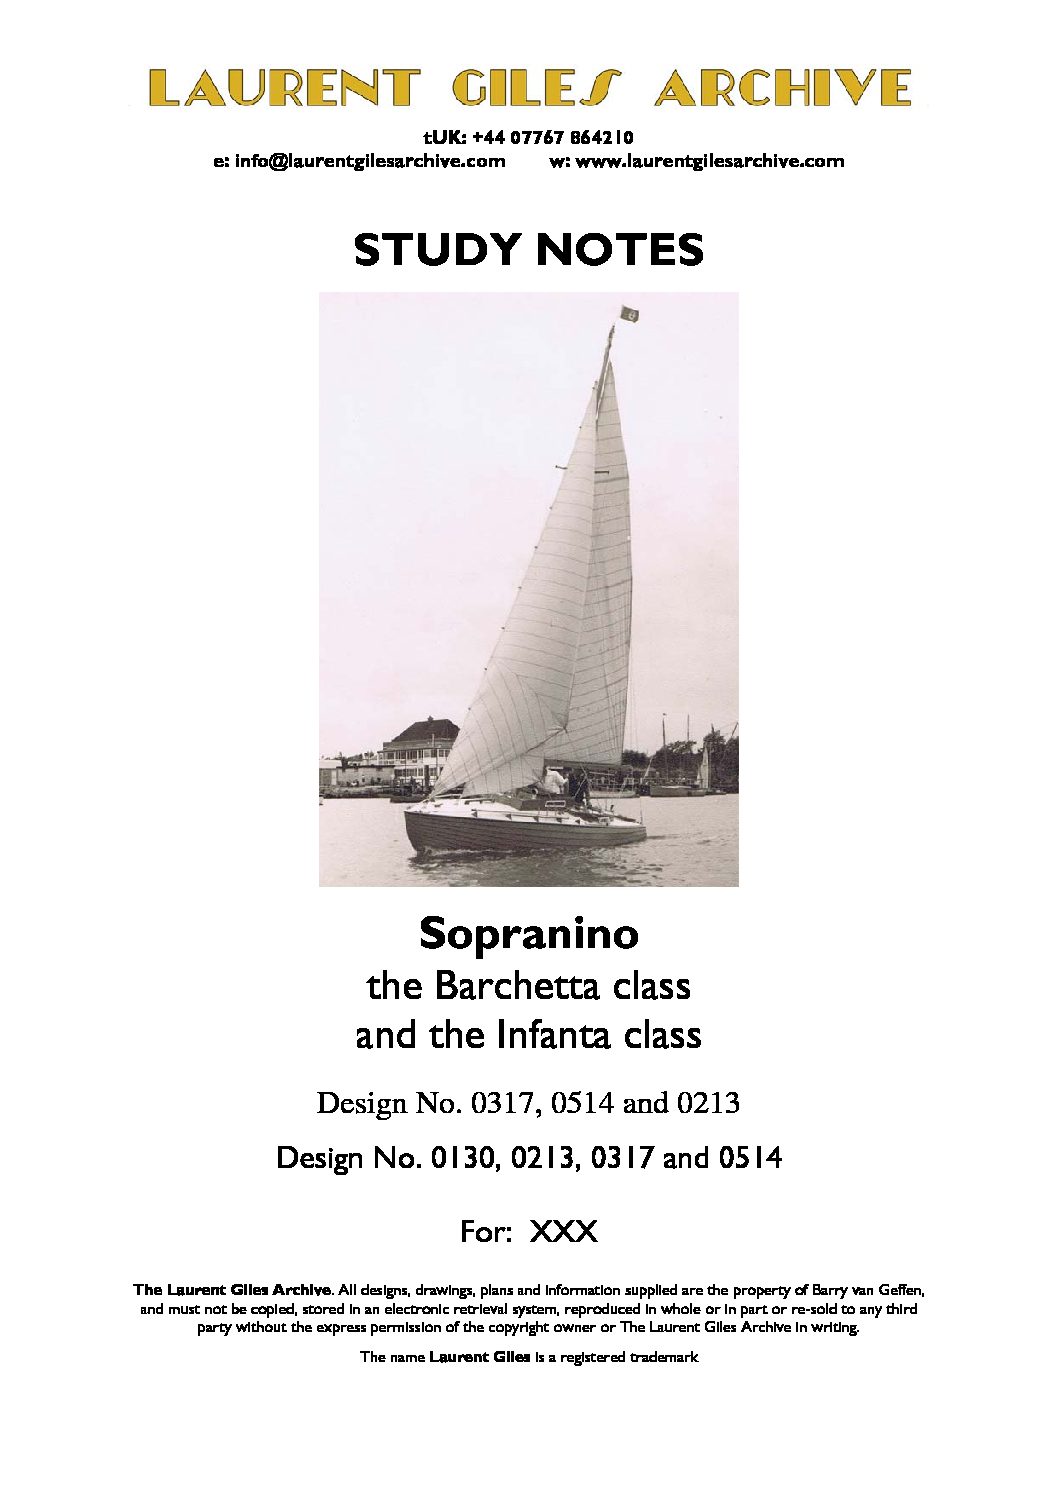 Sopranino 0130 study notes cover